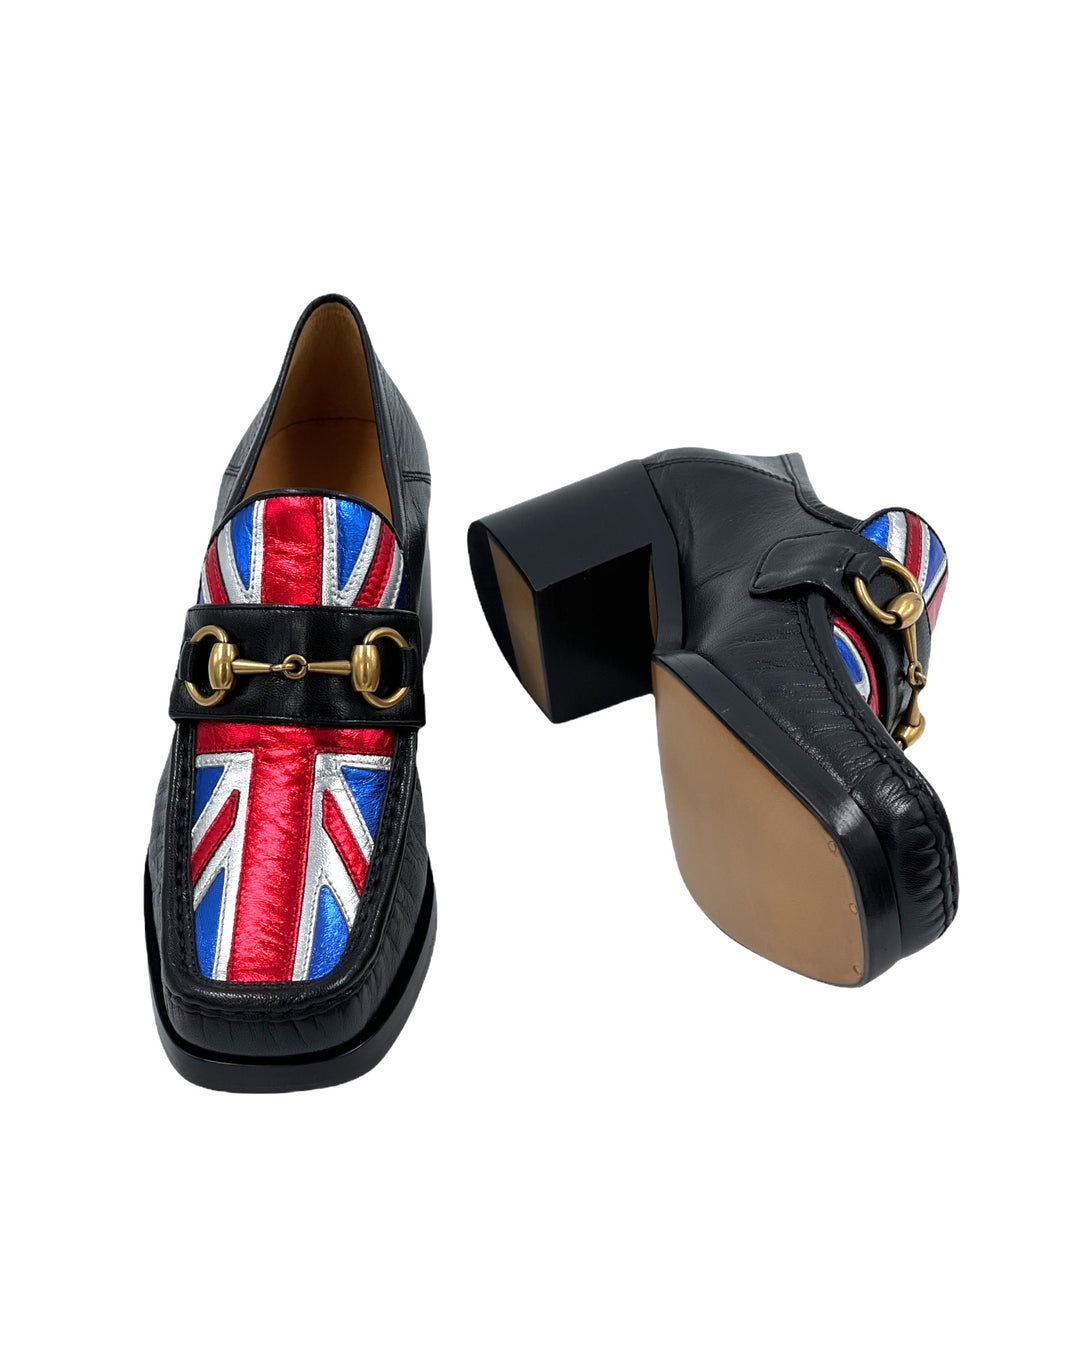 Gucci Union Jack Horsebit Loafer Heels 37.5